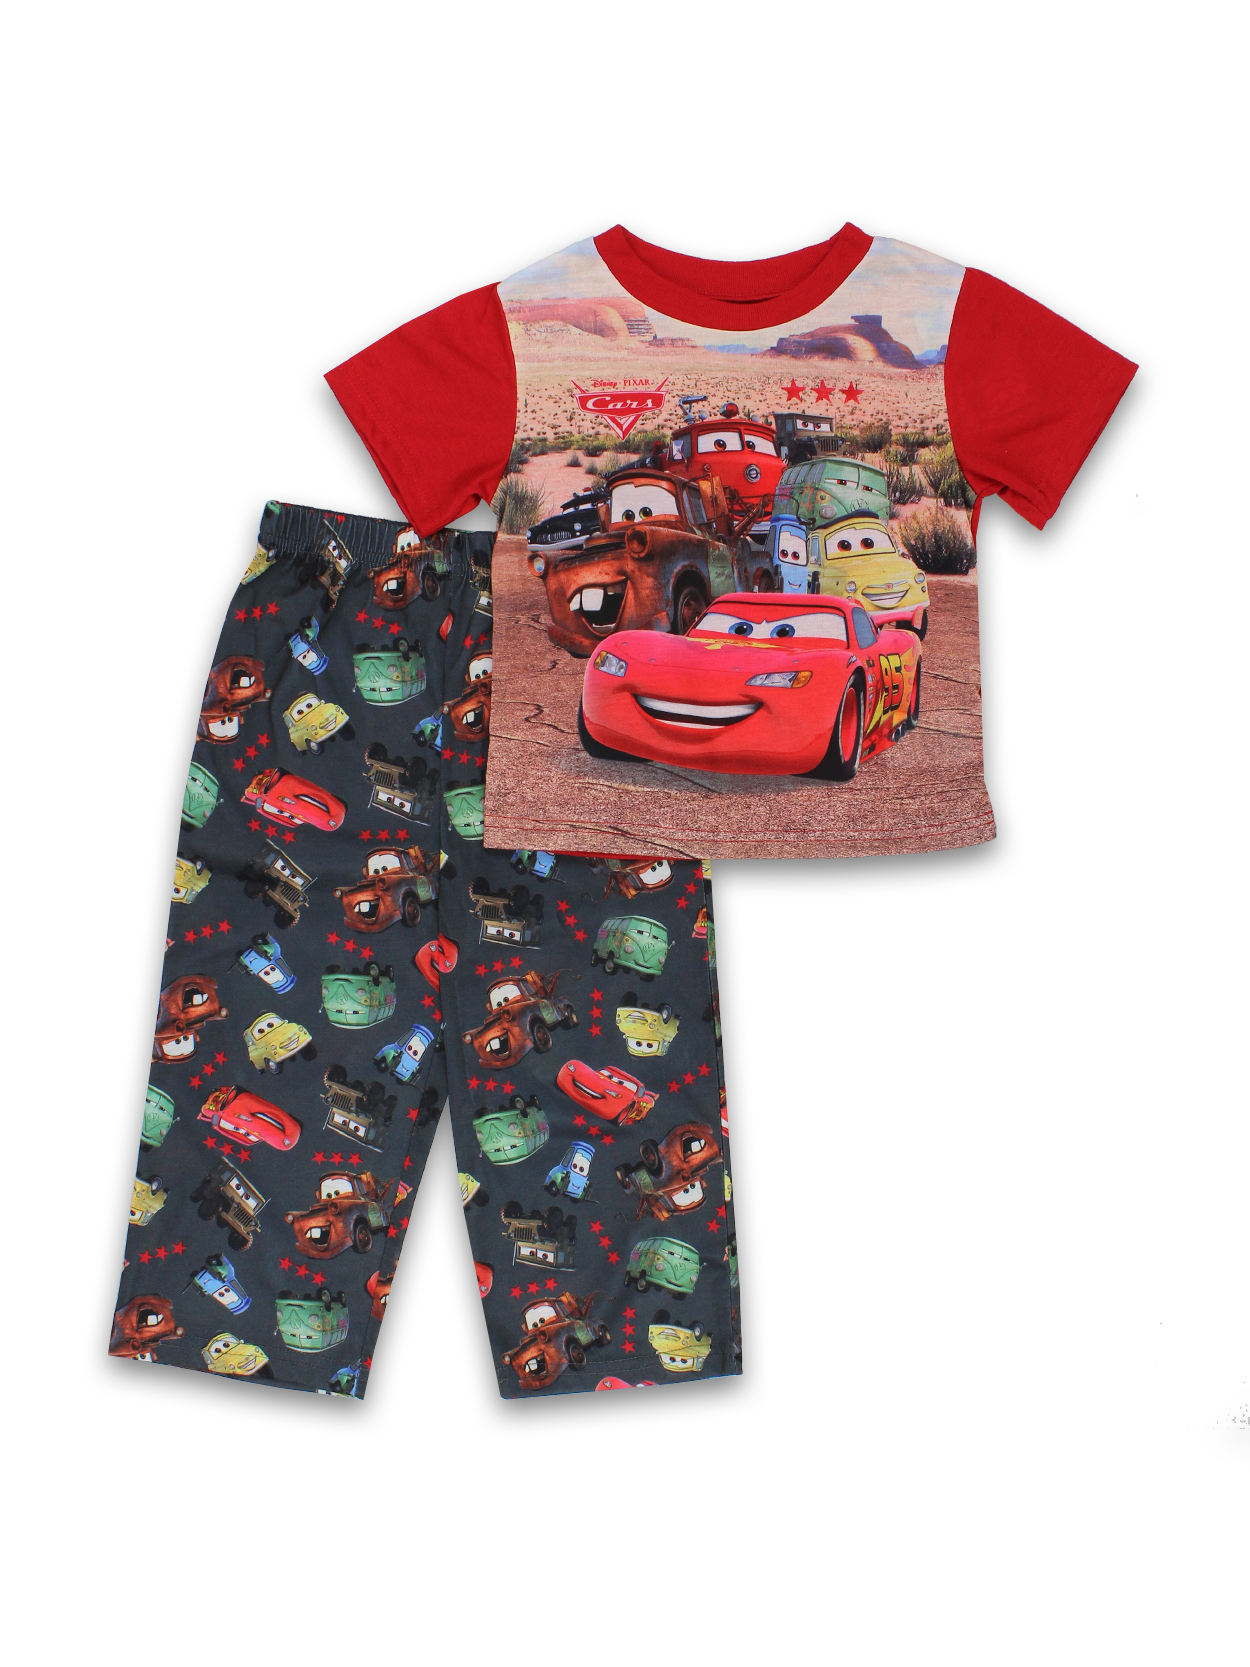 Lightning Mcqueen Pyjamas Set For Boys, Cartoon Car T-shirt And Pants  2-piece Pajamas For 4-7y, Kids Sleepwear Pj Gift